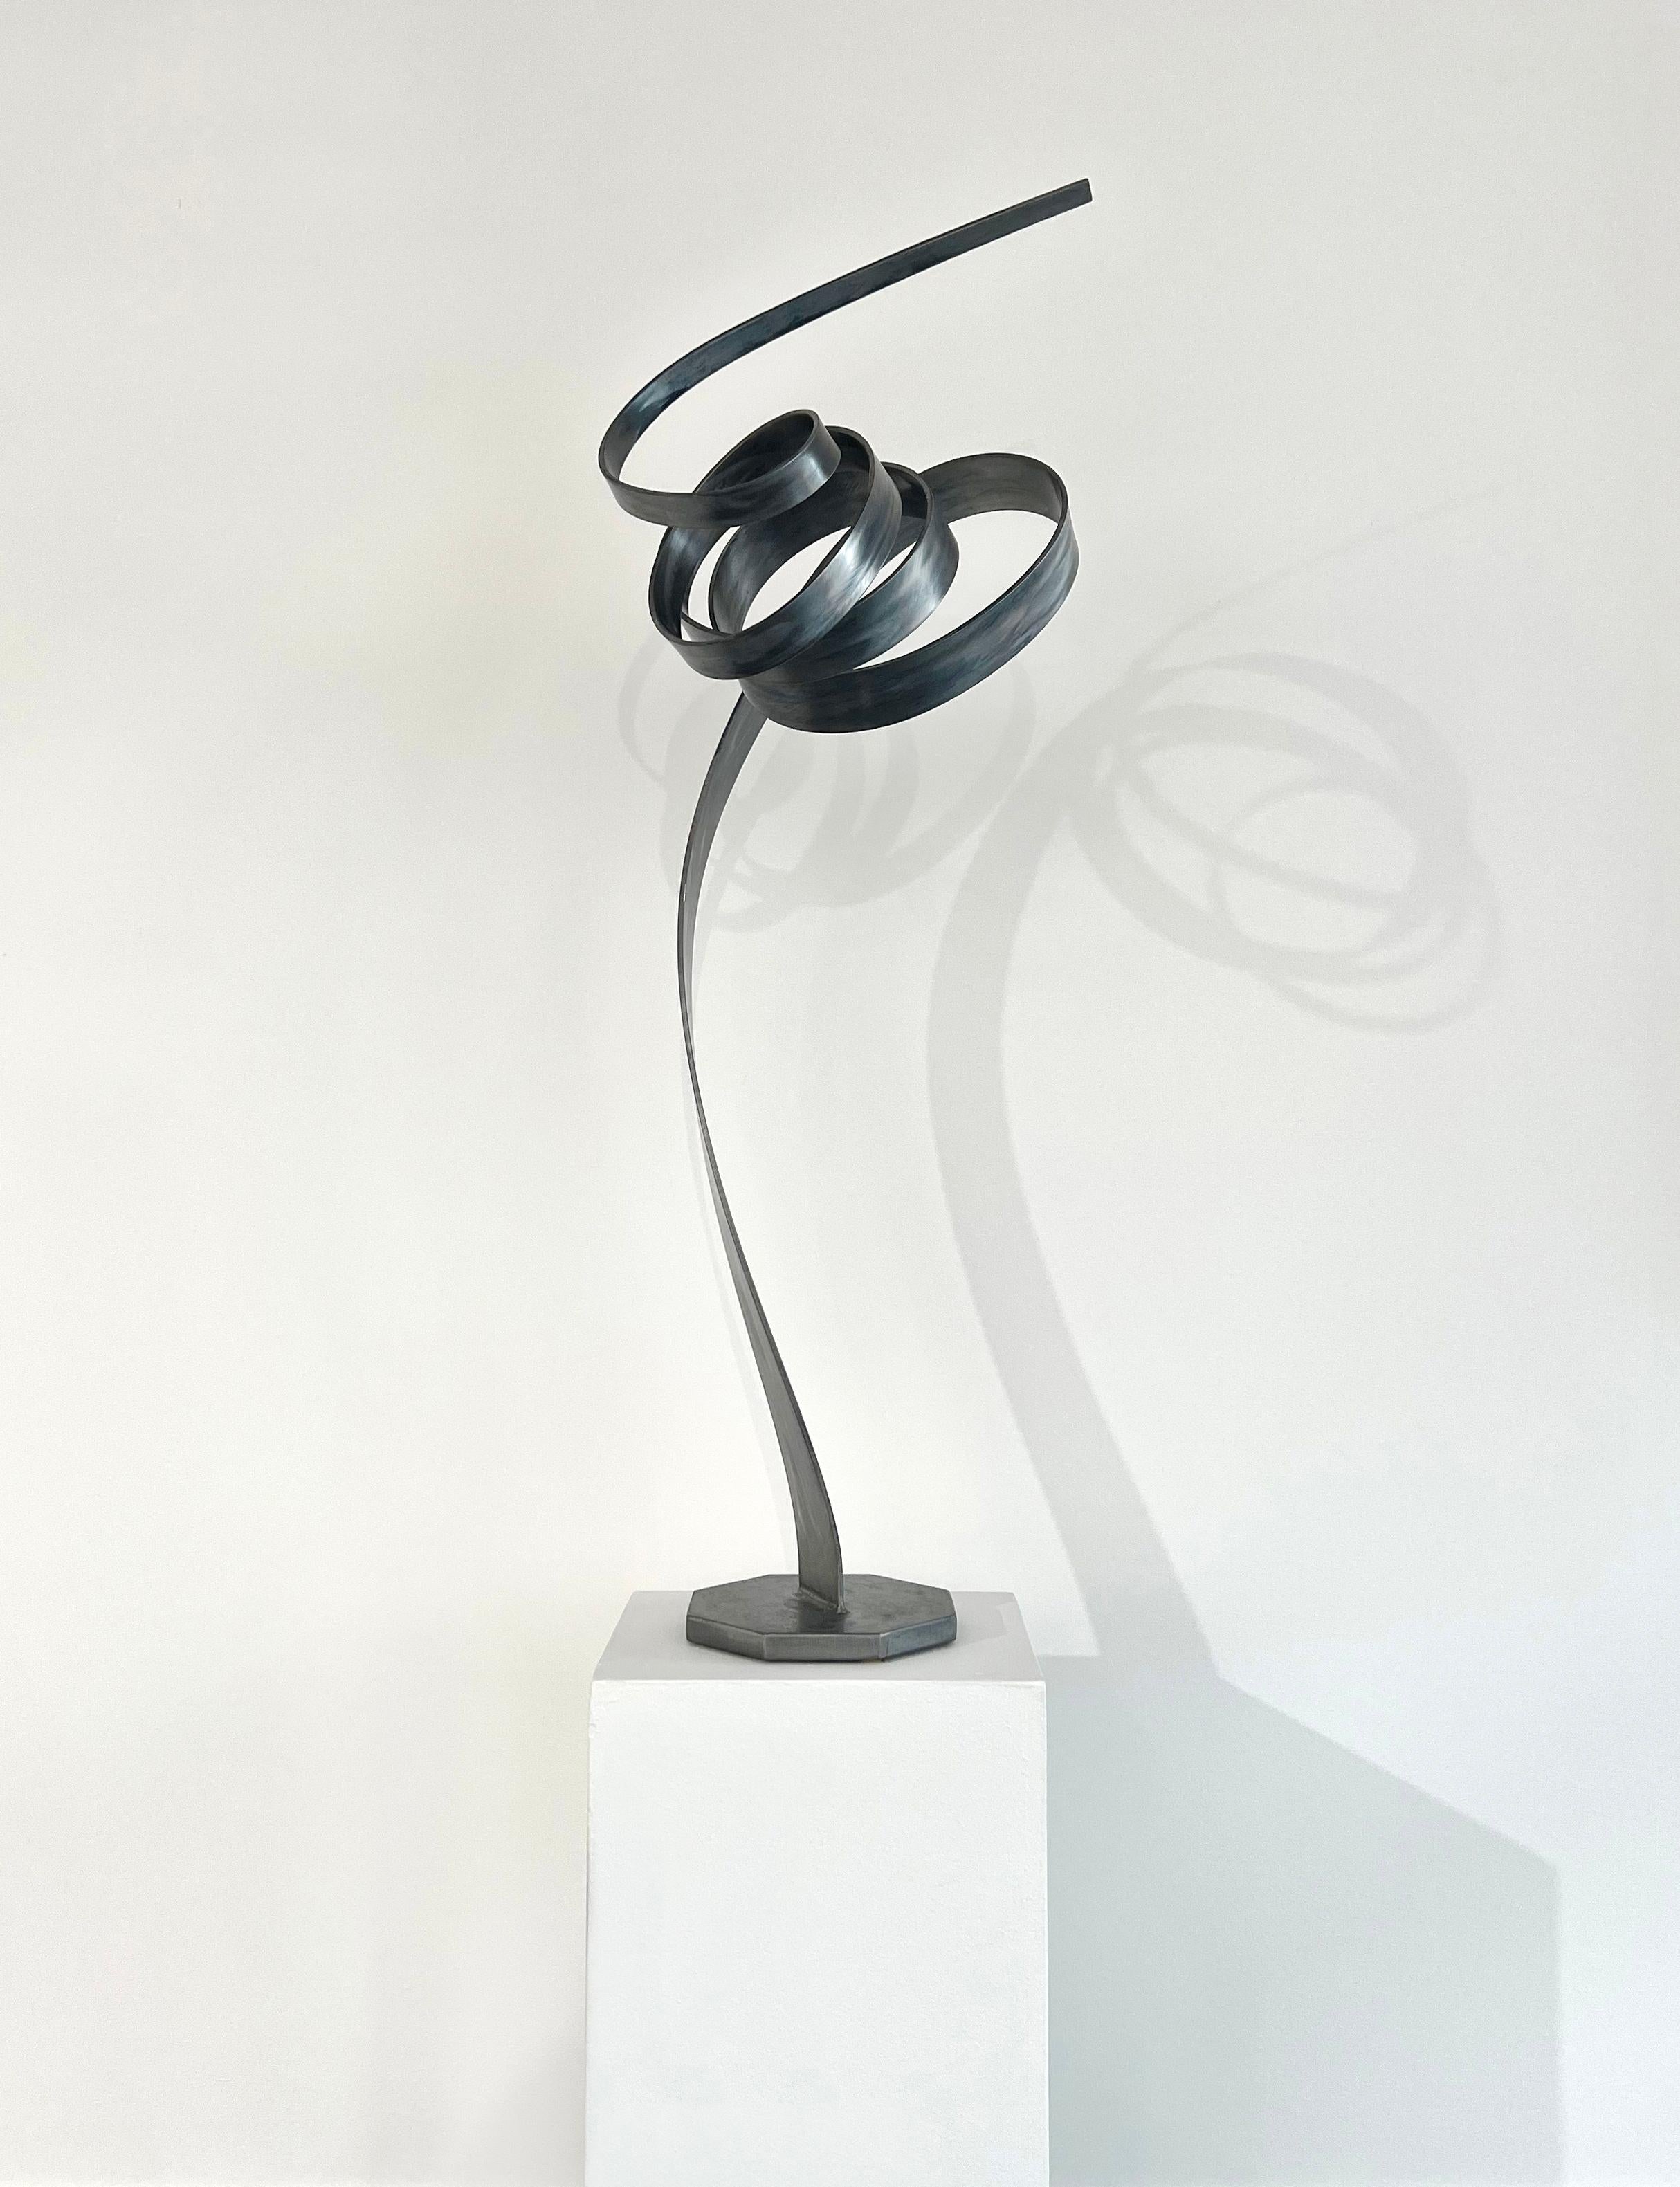 Joe Sorge Abstract Sculpture - "Vortex, " Abstract Steel Sculpture